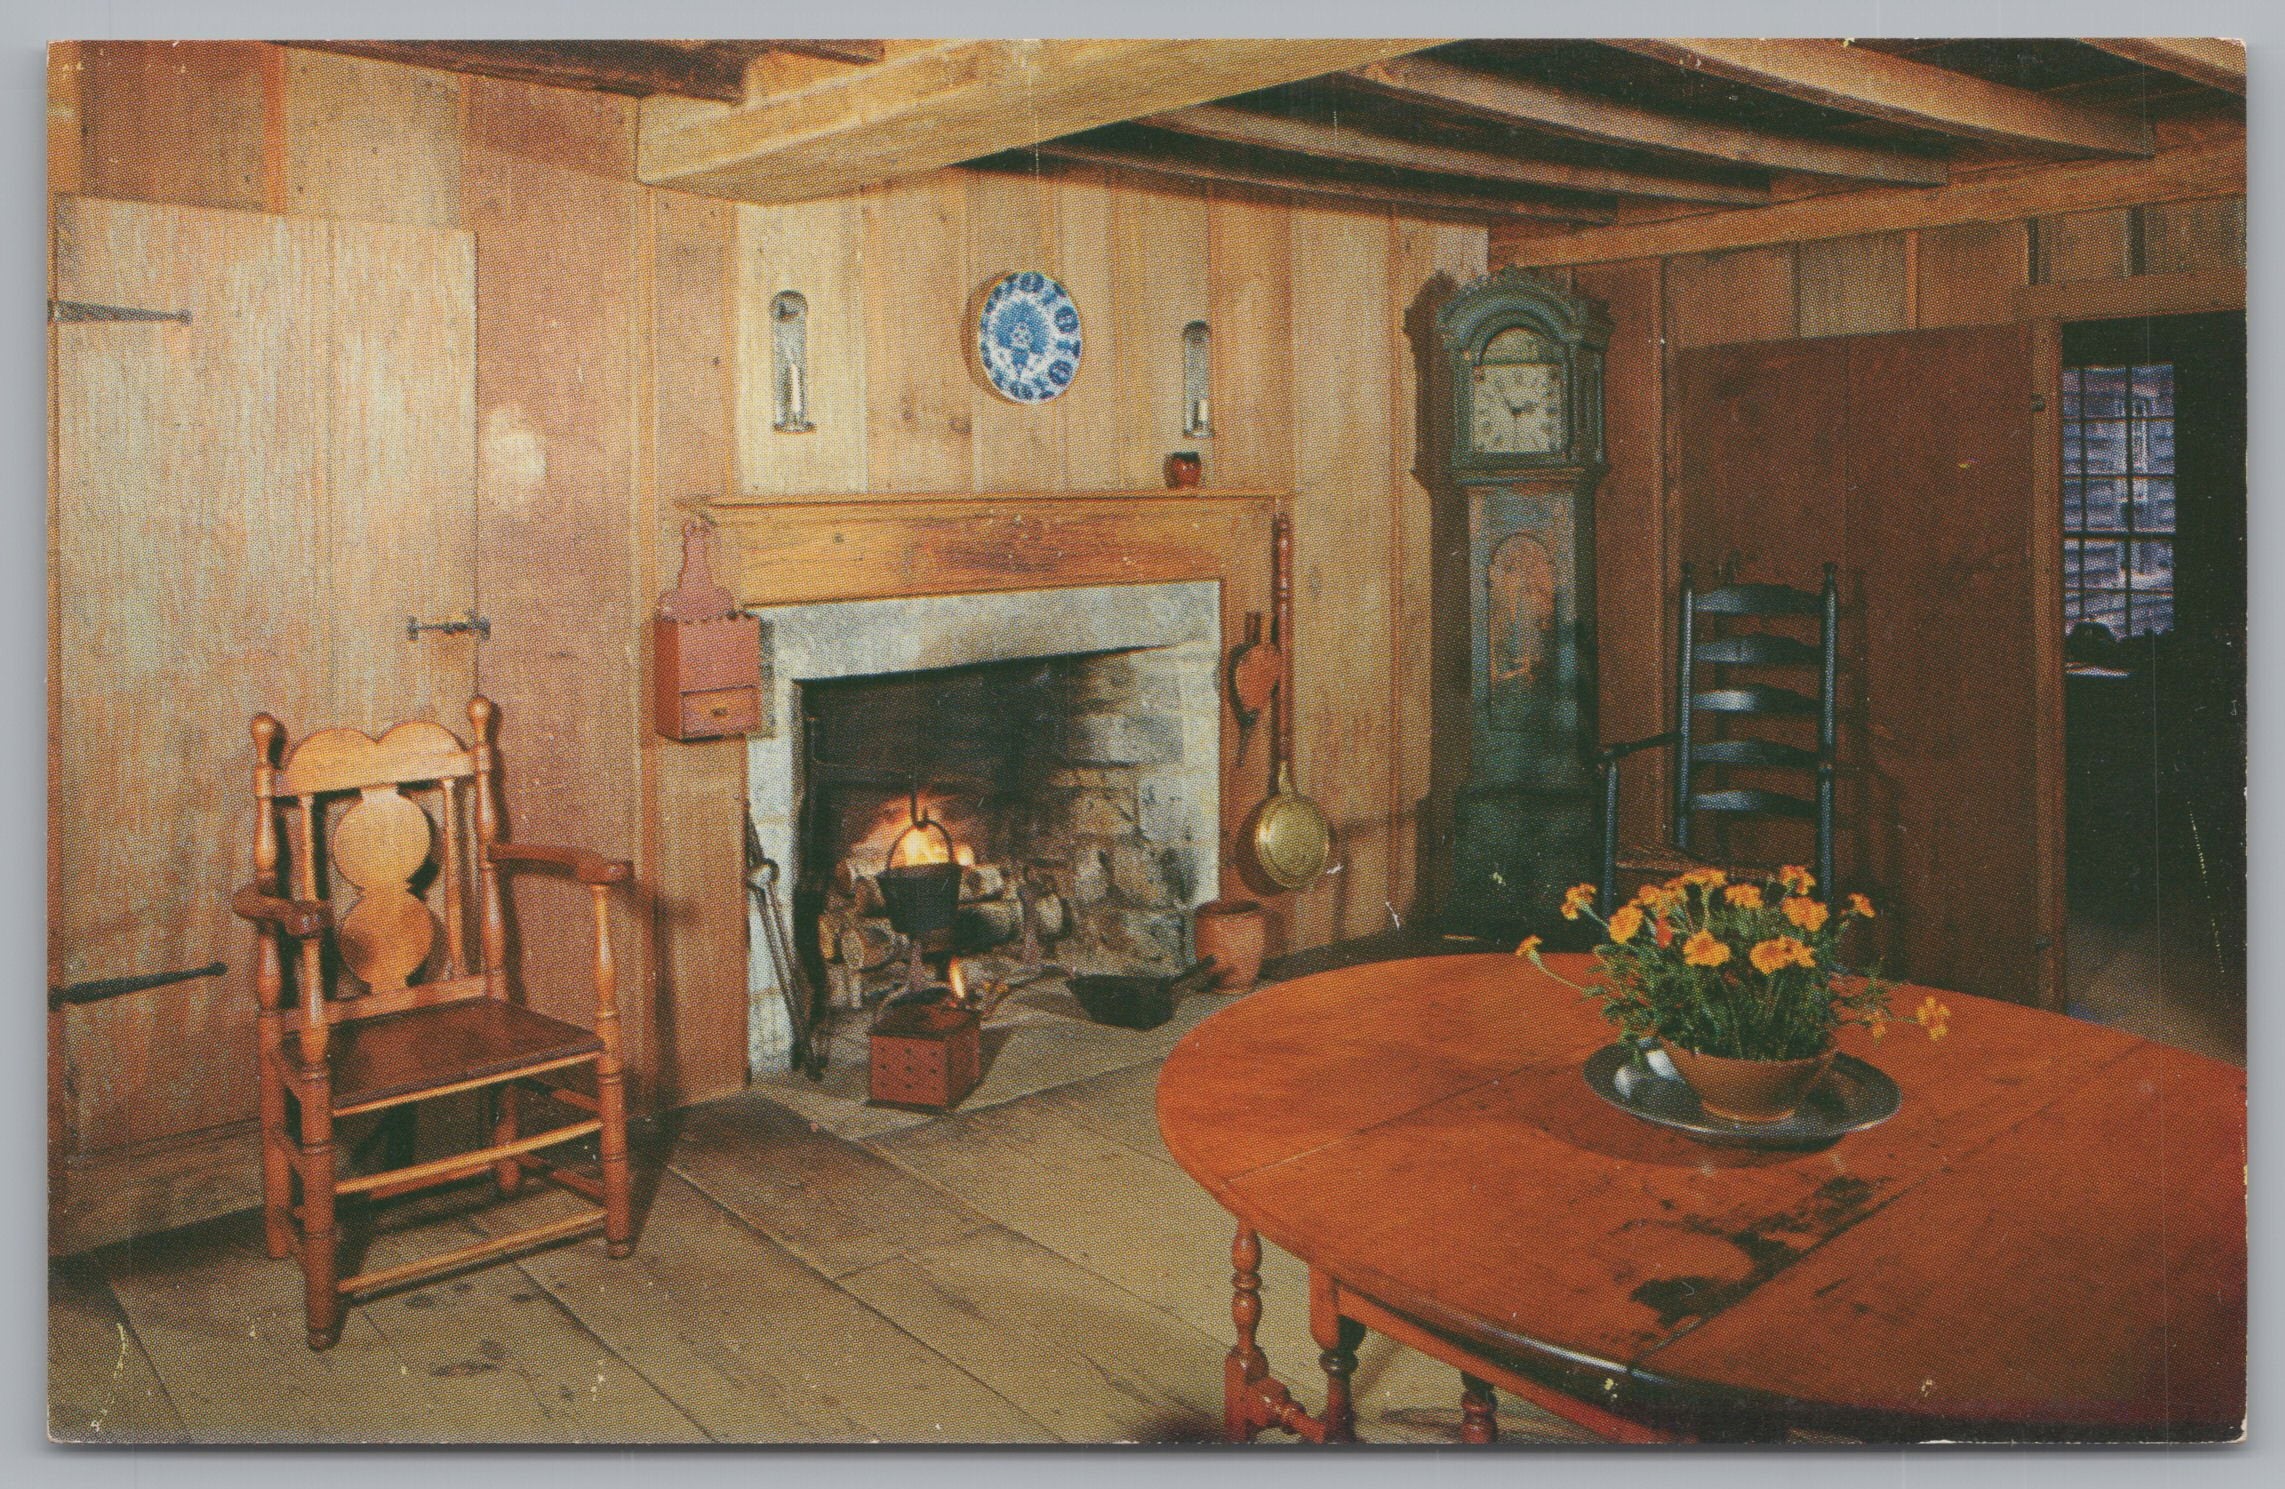 Stephen Finch House, Old Sturbridge Village, Vintage Post Card.